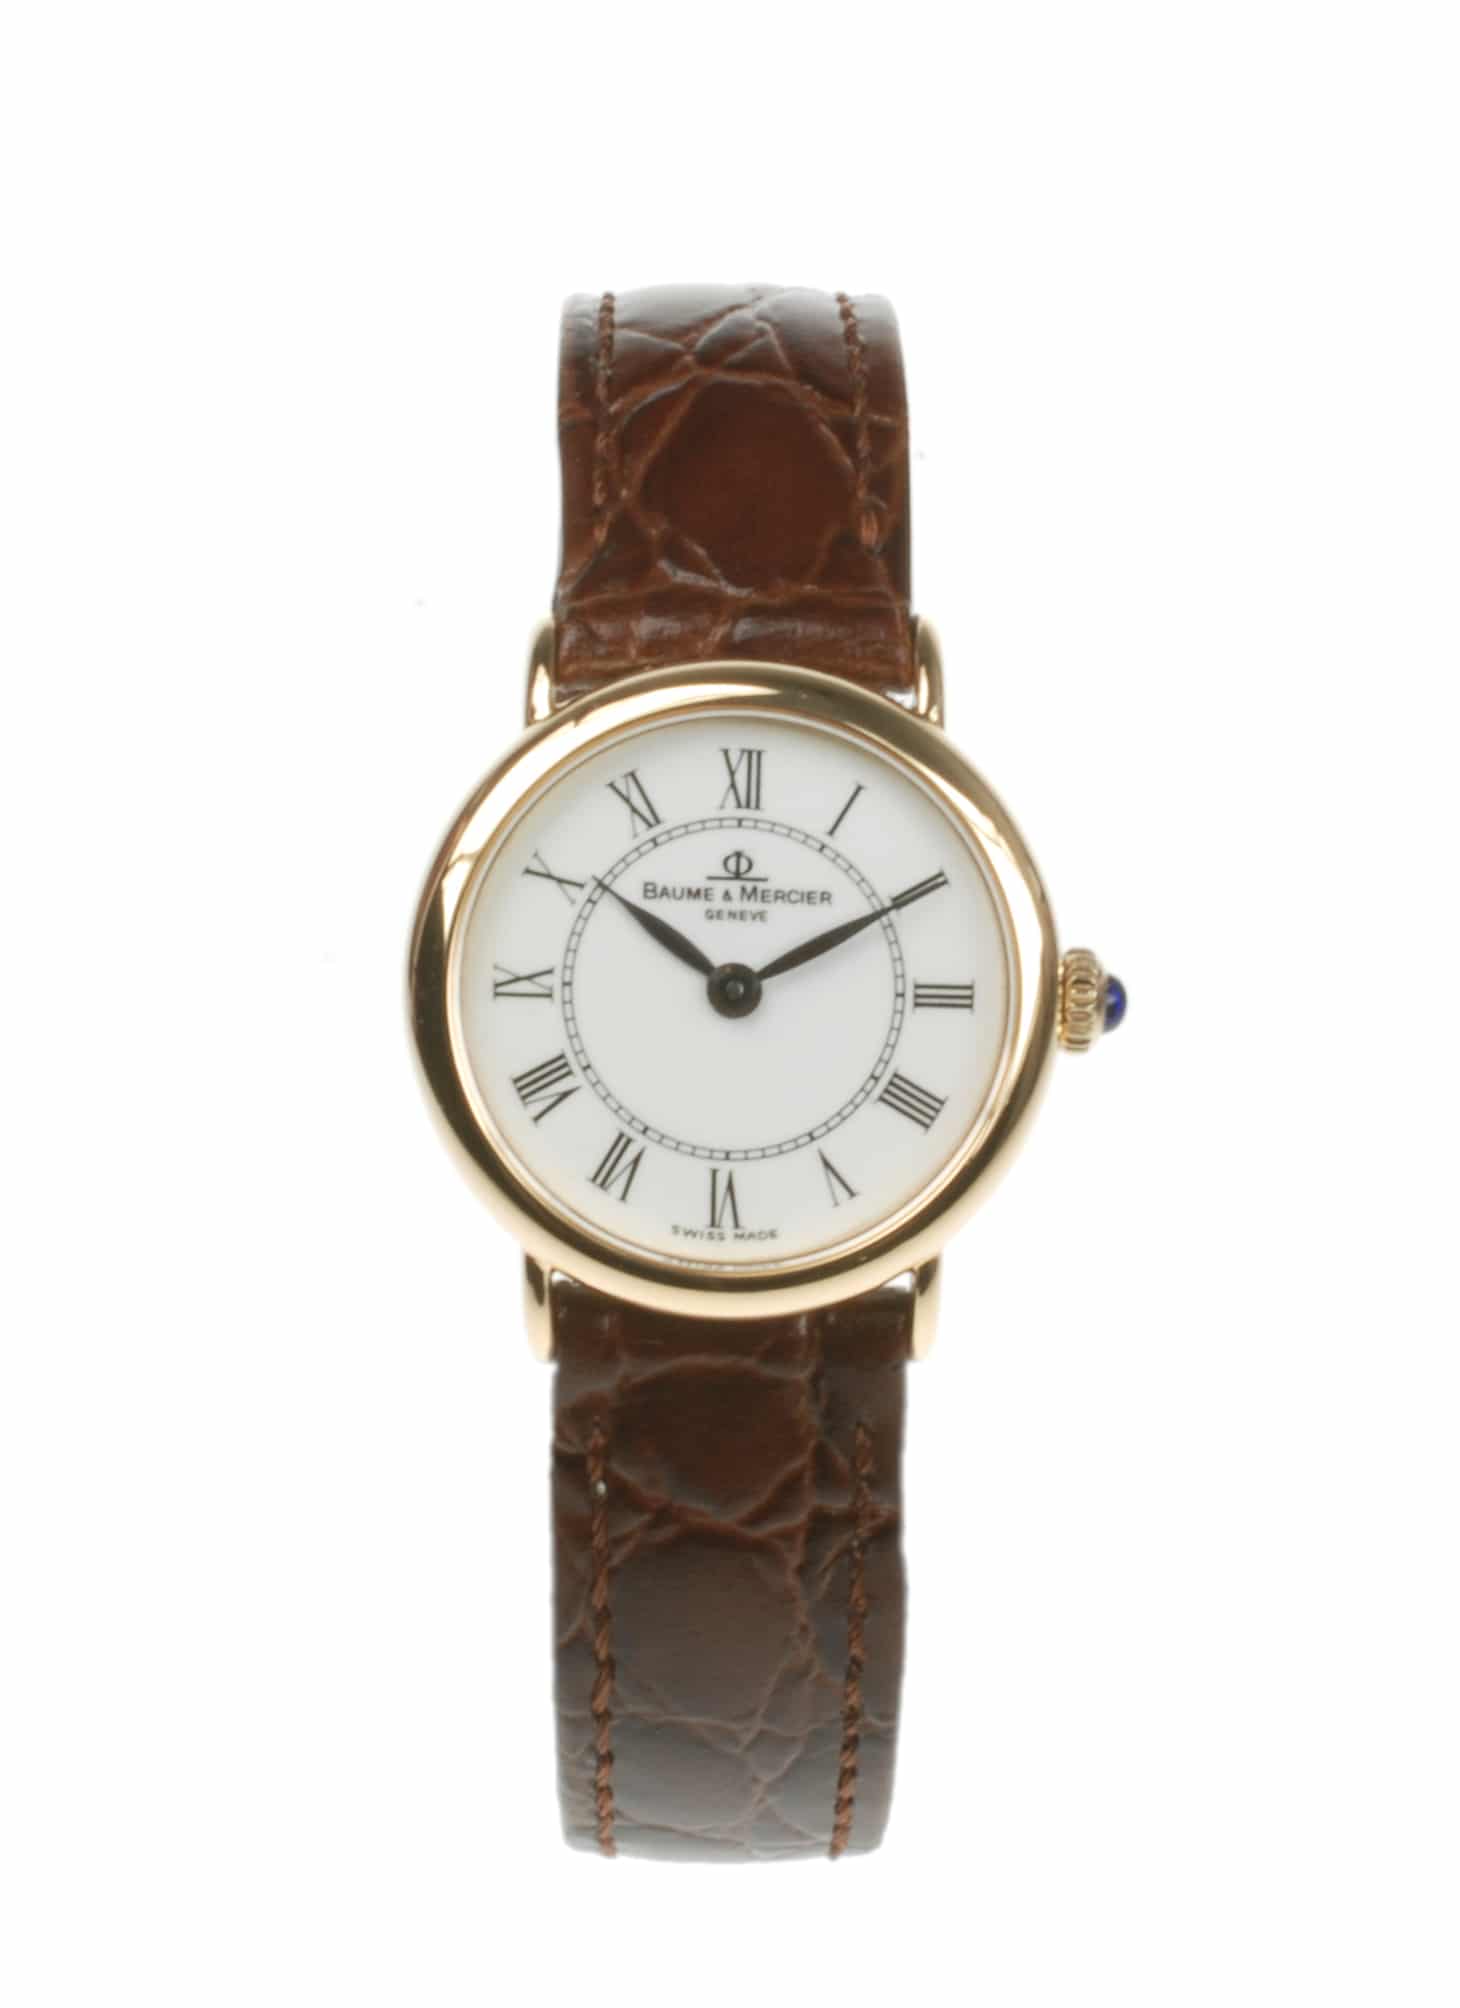 Baume & Mercier Preowned Watch - Heptinstalls Jewellers of Worthing Est ...